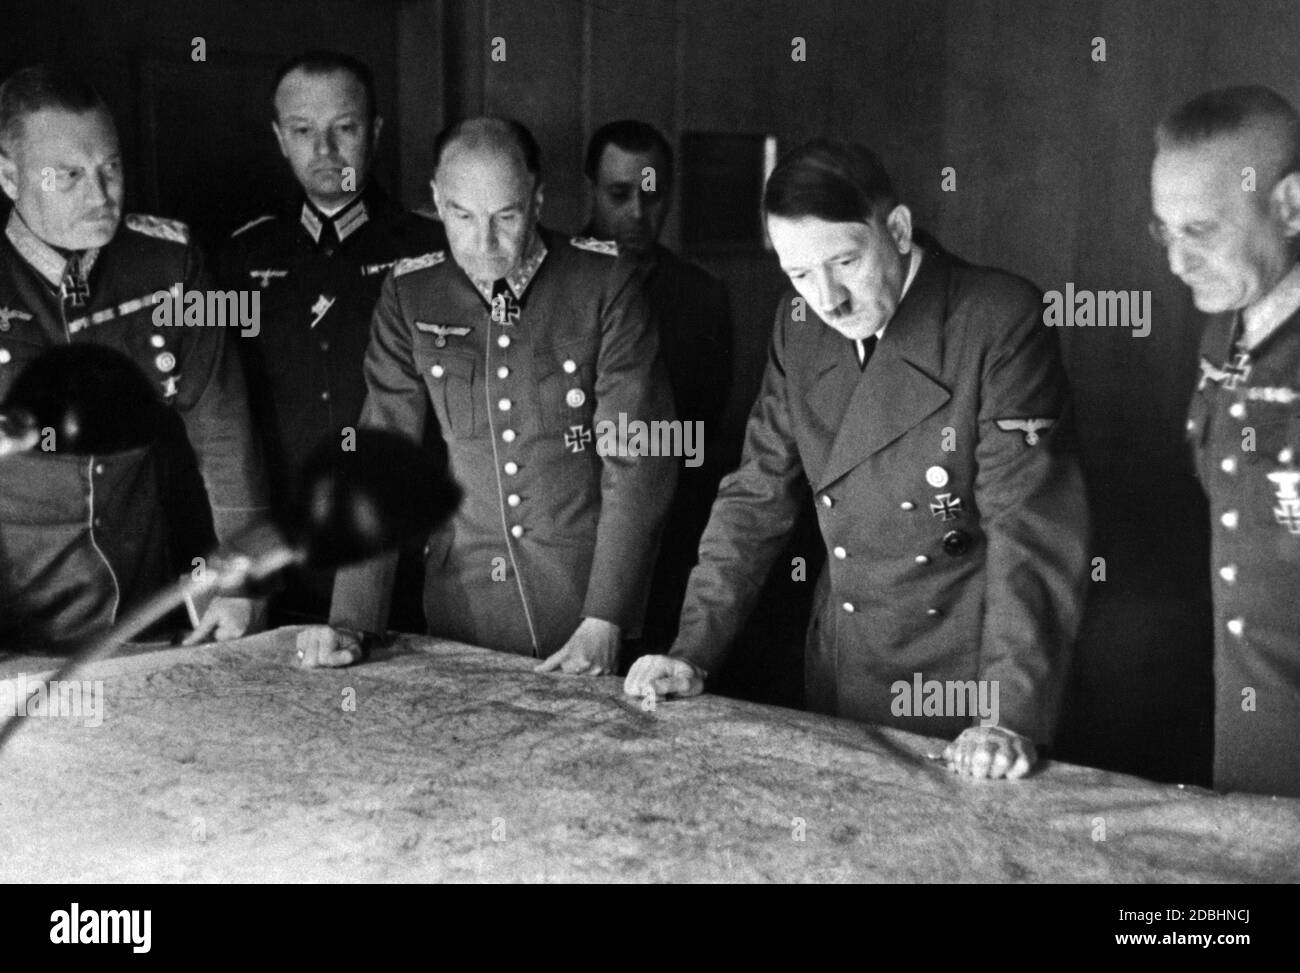 Generalfeldmarschall Keitel (Chief of the OKW), Generalfeldmarschall von Brauchitsch (Commander-in-Chief of the Army) and Generaloberst Halder (Chief of the General Staff of the Army) with Adolf Hitler looking at the map. Stock Photo